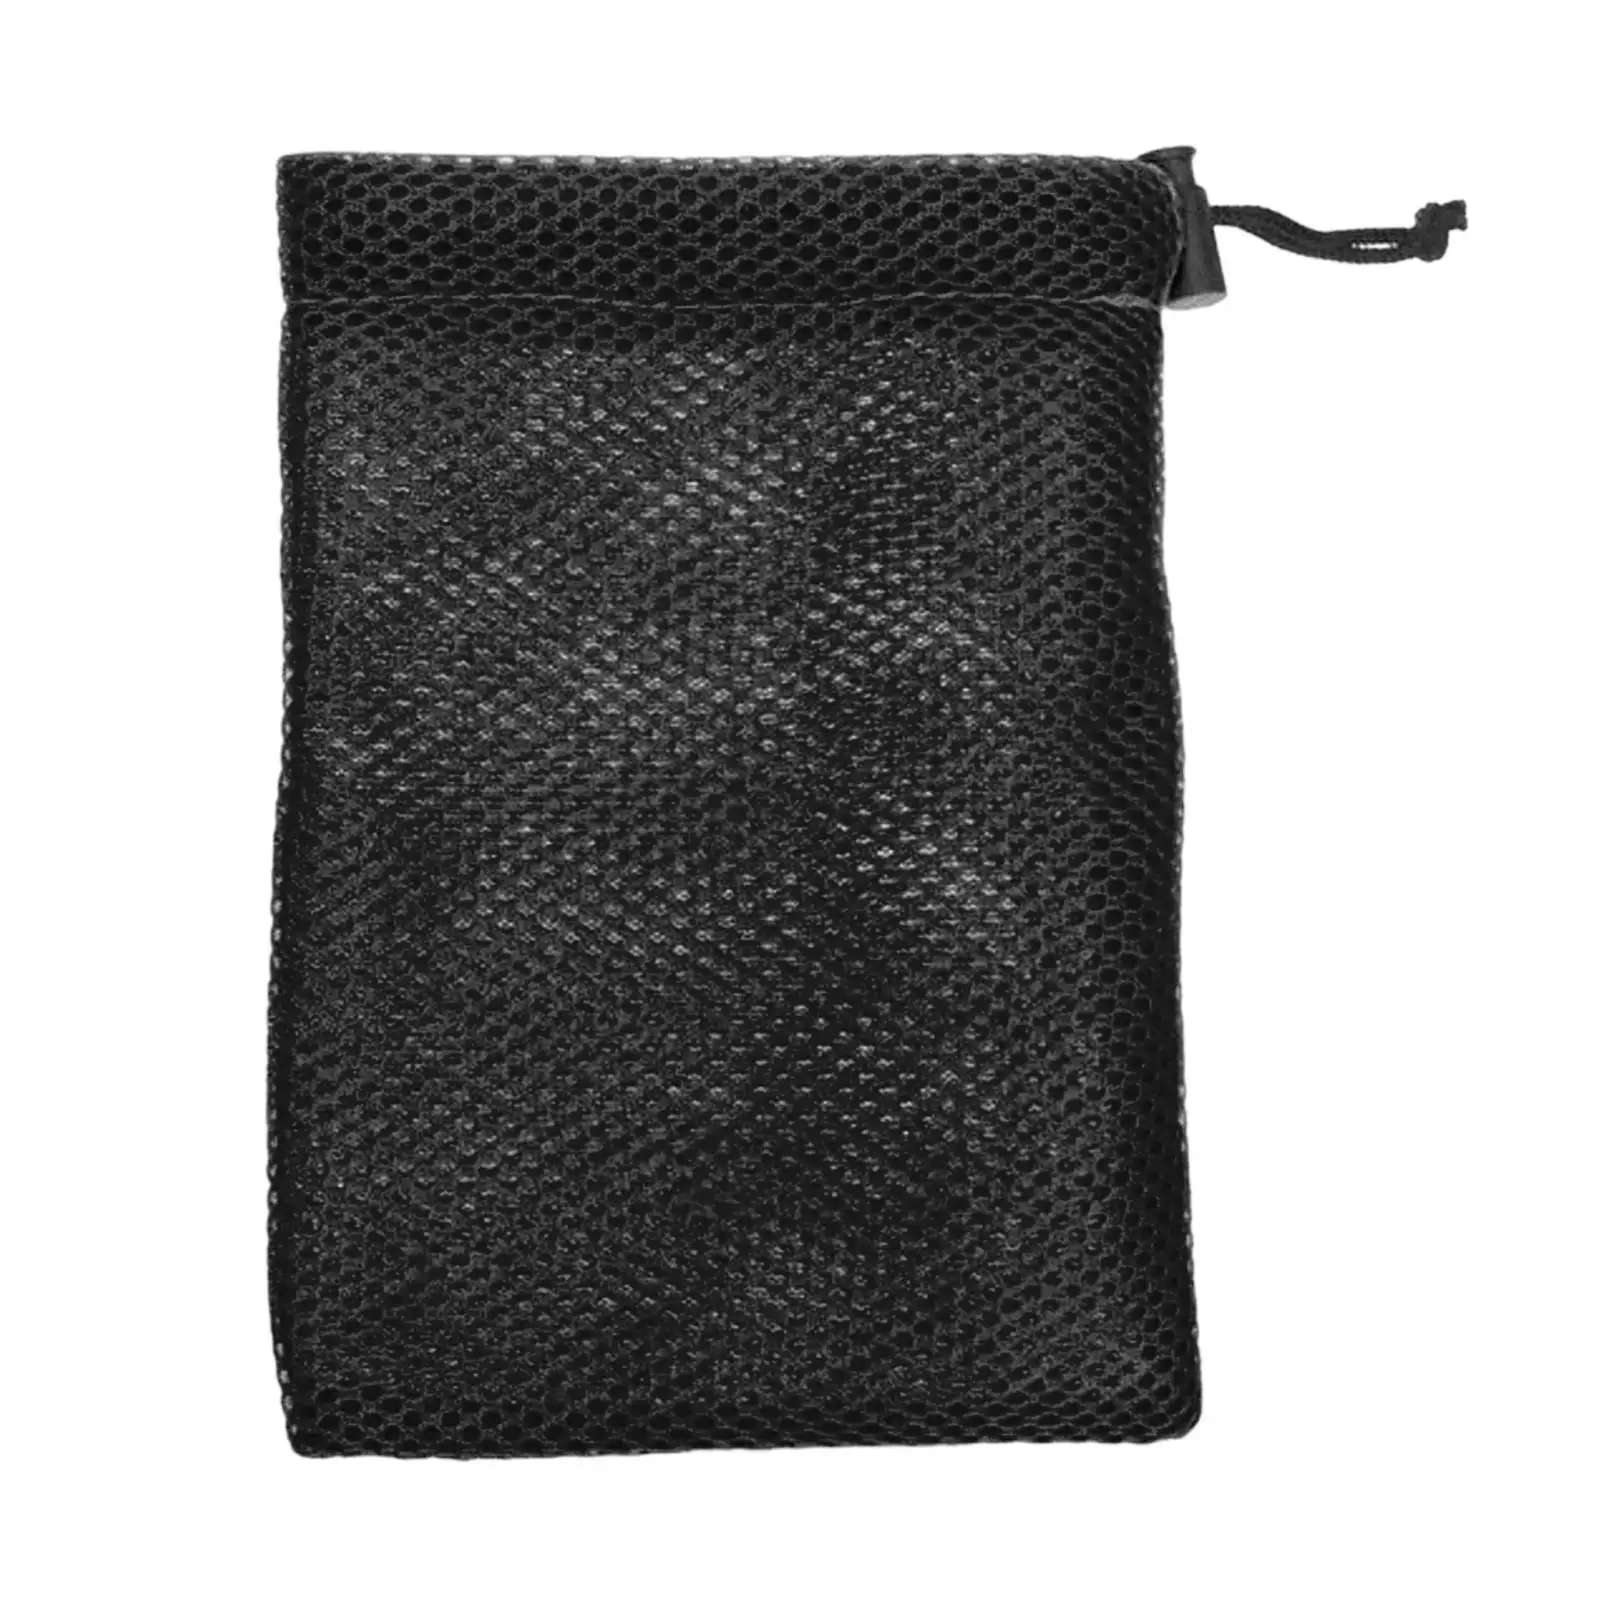 Small Mesh Drawstring Bag Stuff Sack with Cord Lock Closure Mesh Bag Storage